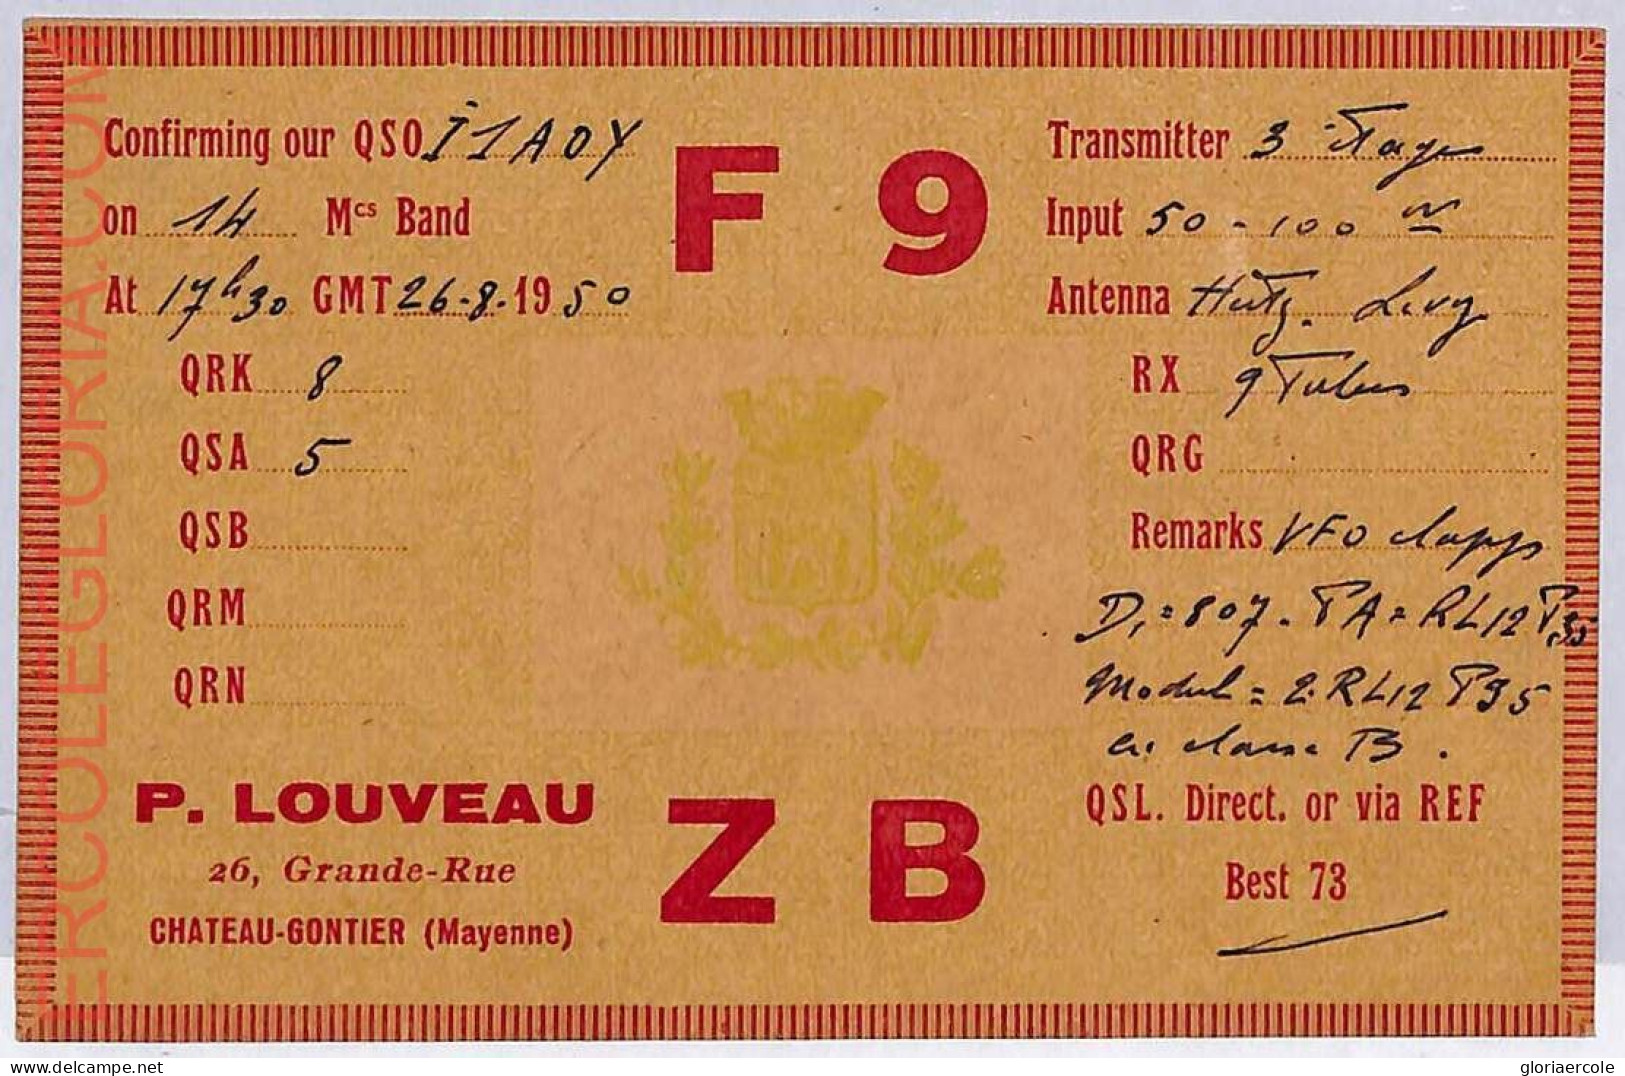 Ad9065 - FRANCE - RADIO FREQUENCY CARD   - 1950 - Radio